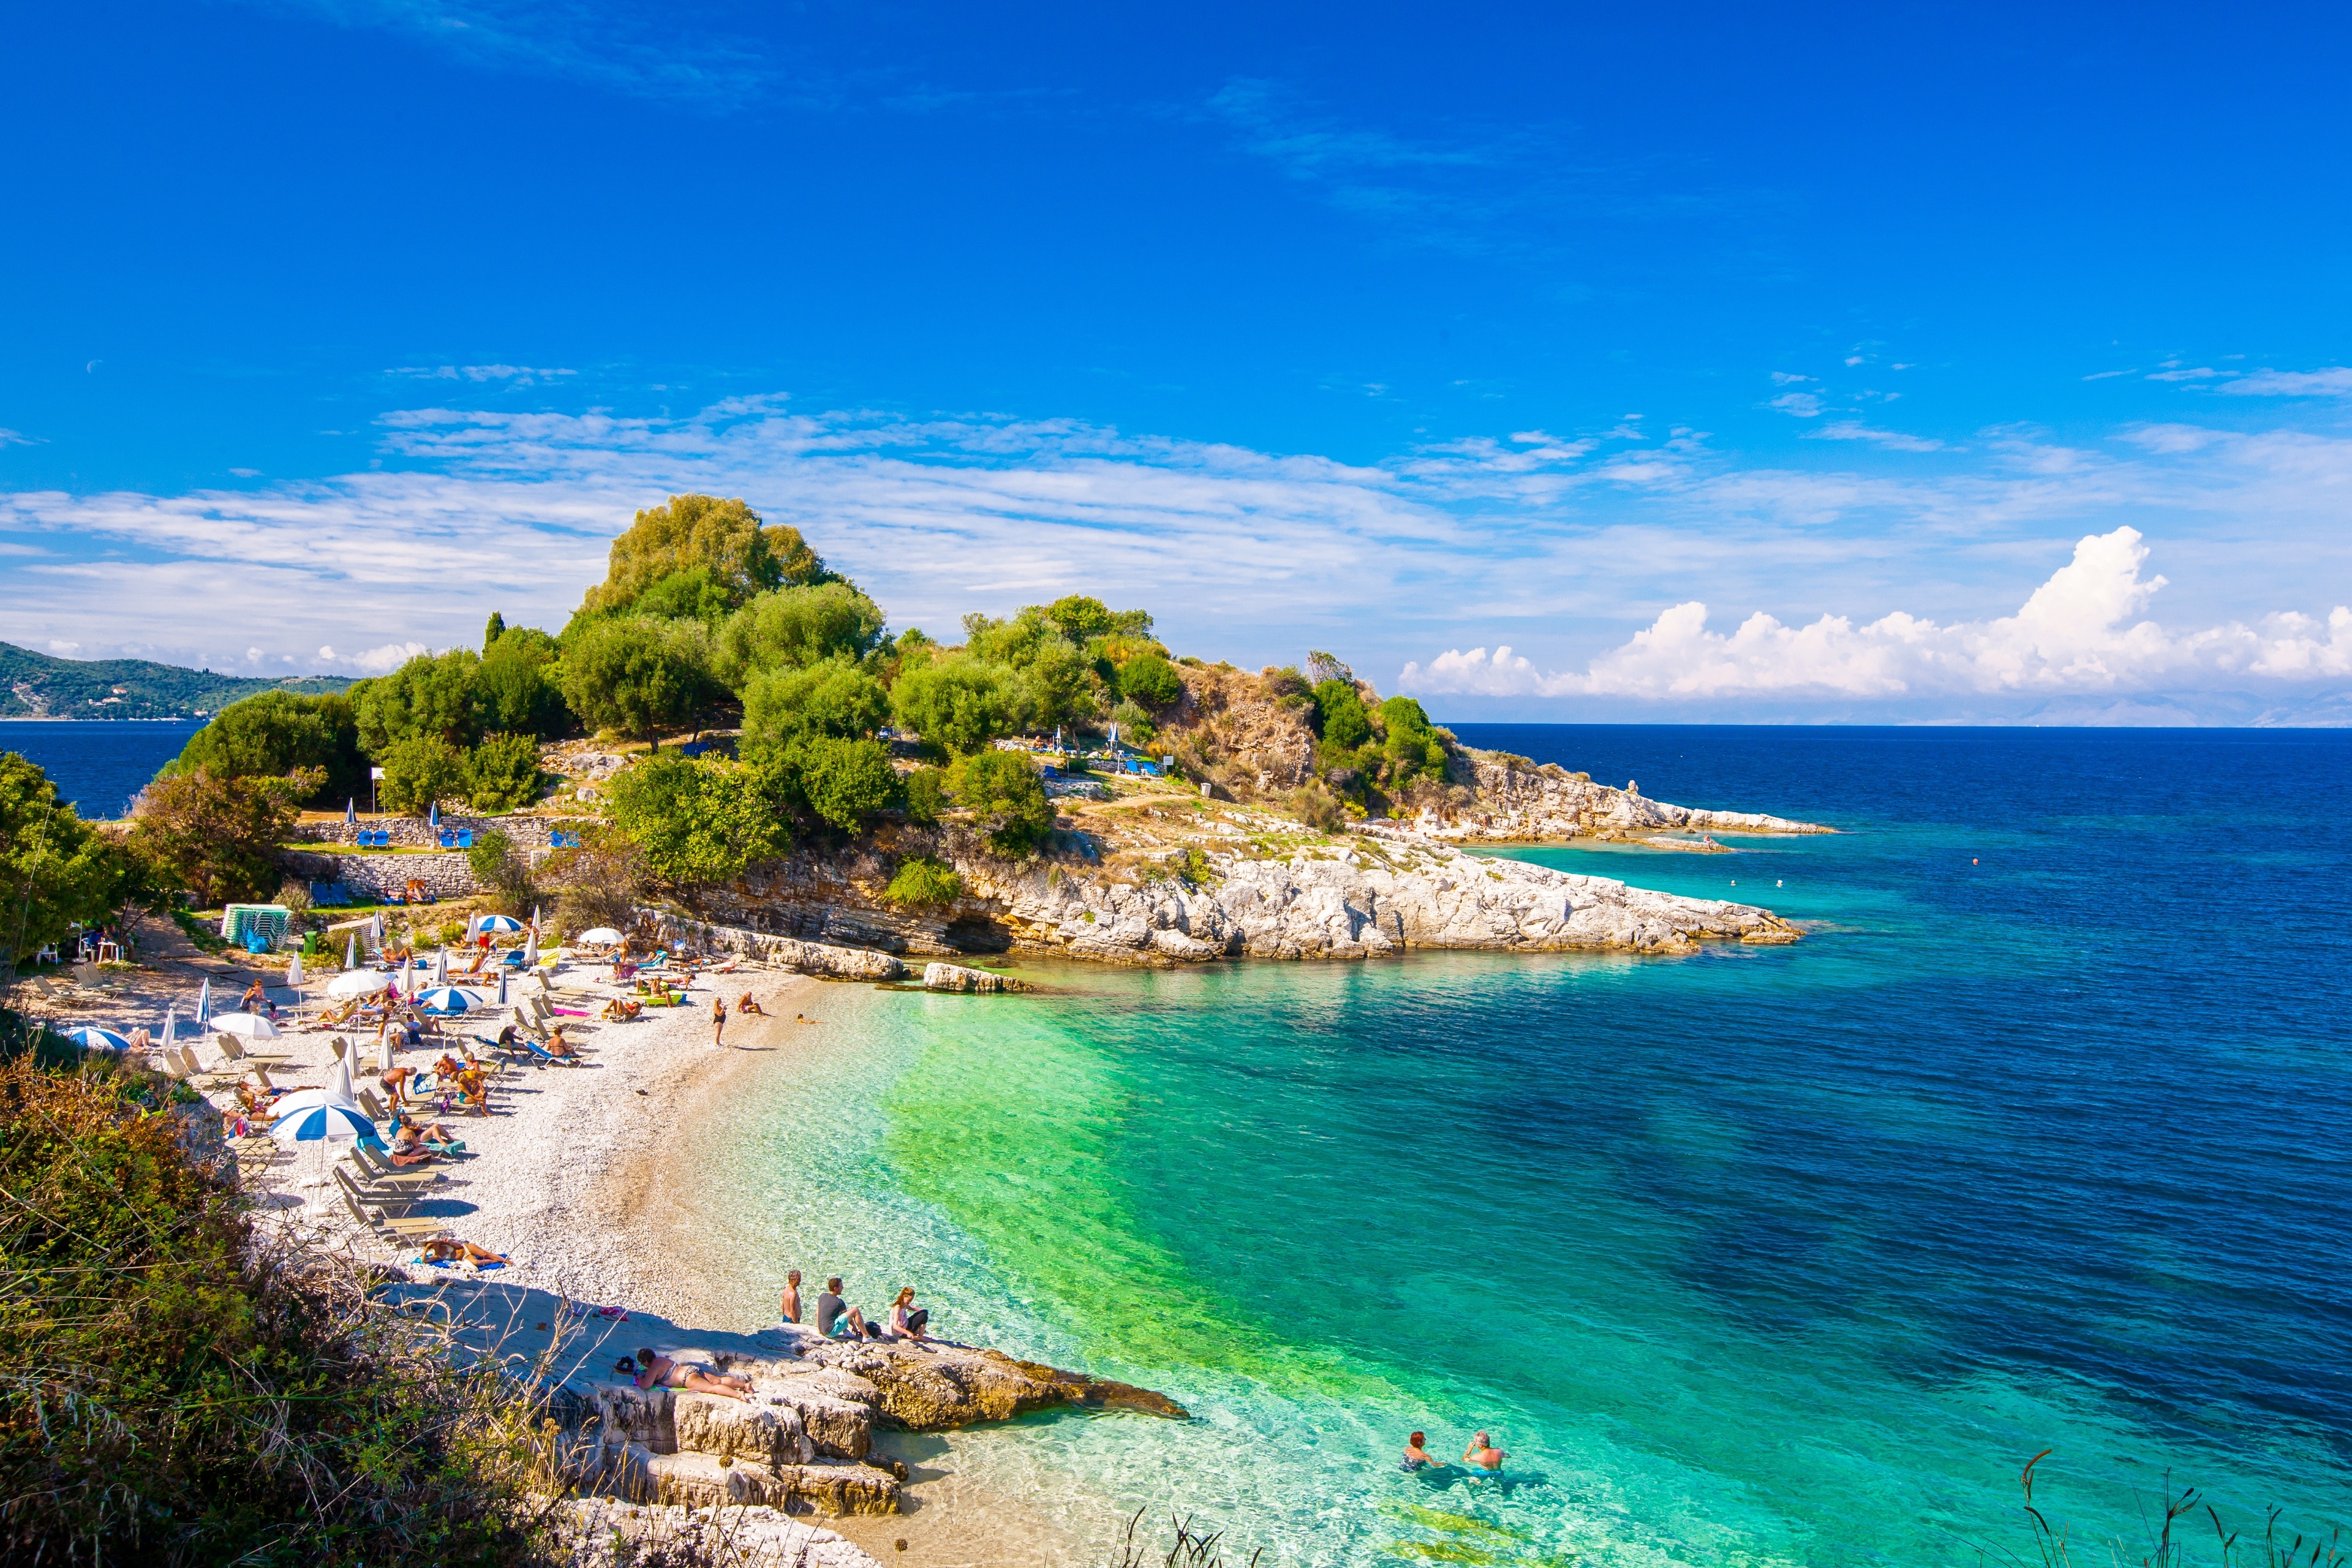 Corfu, Ionian Islands Region, Greece